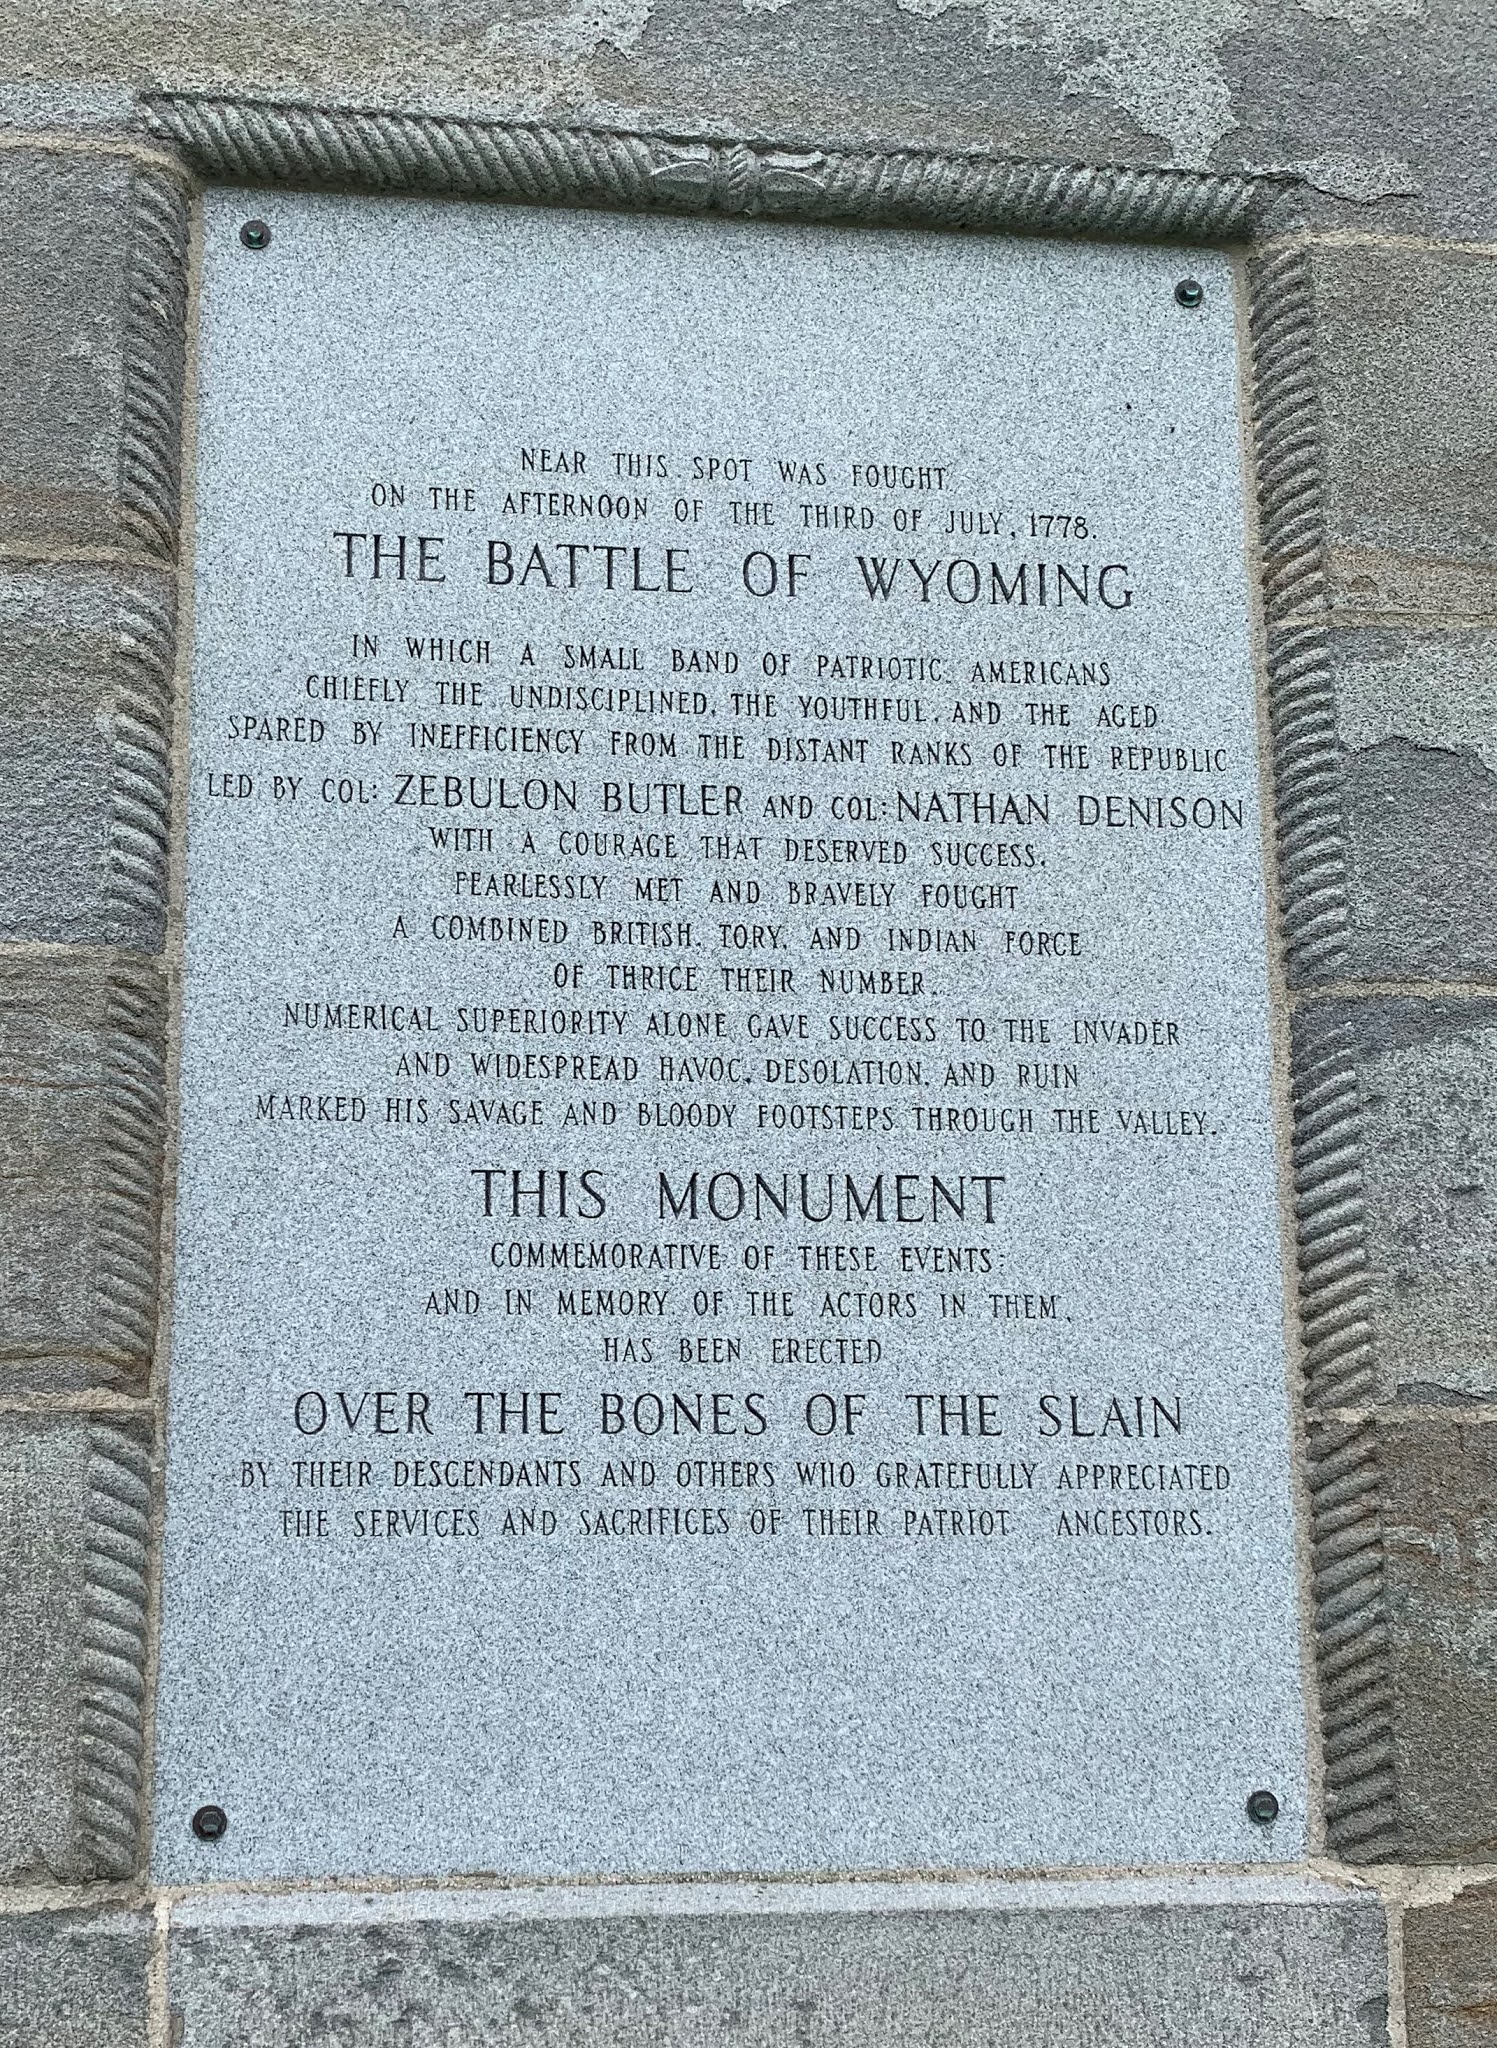 Debby's Family Genealogy Blog: The Wyoming Massacre and Congress